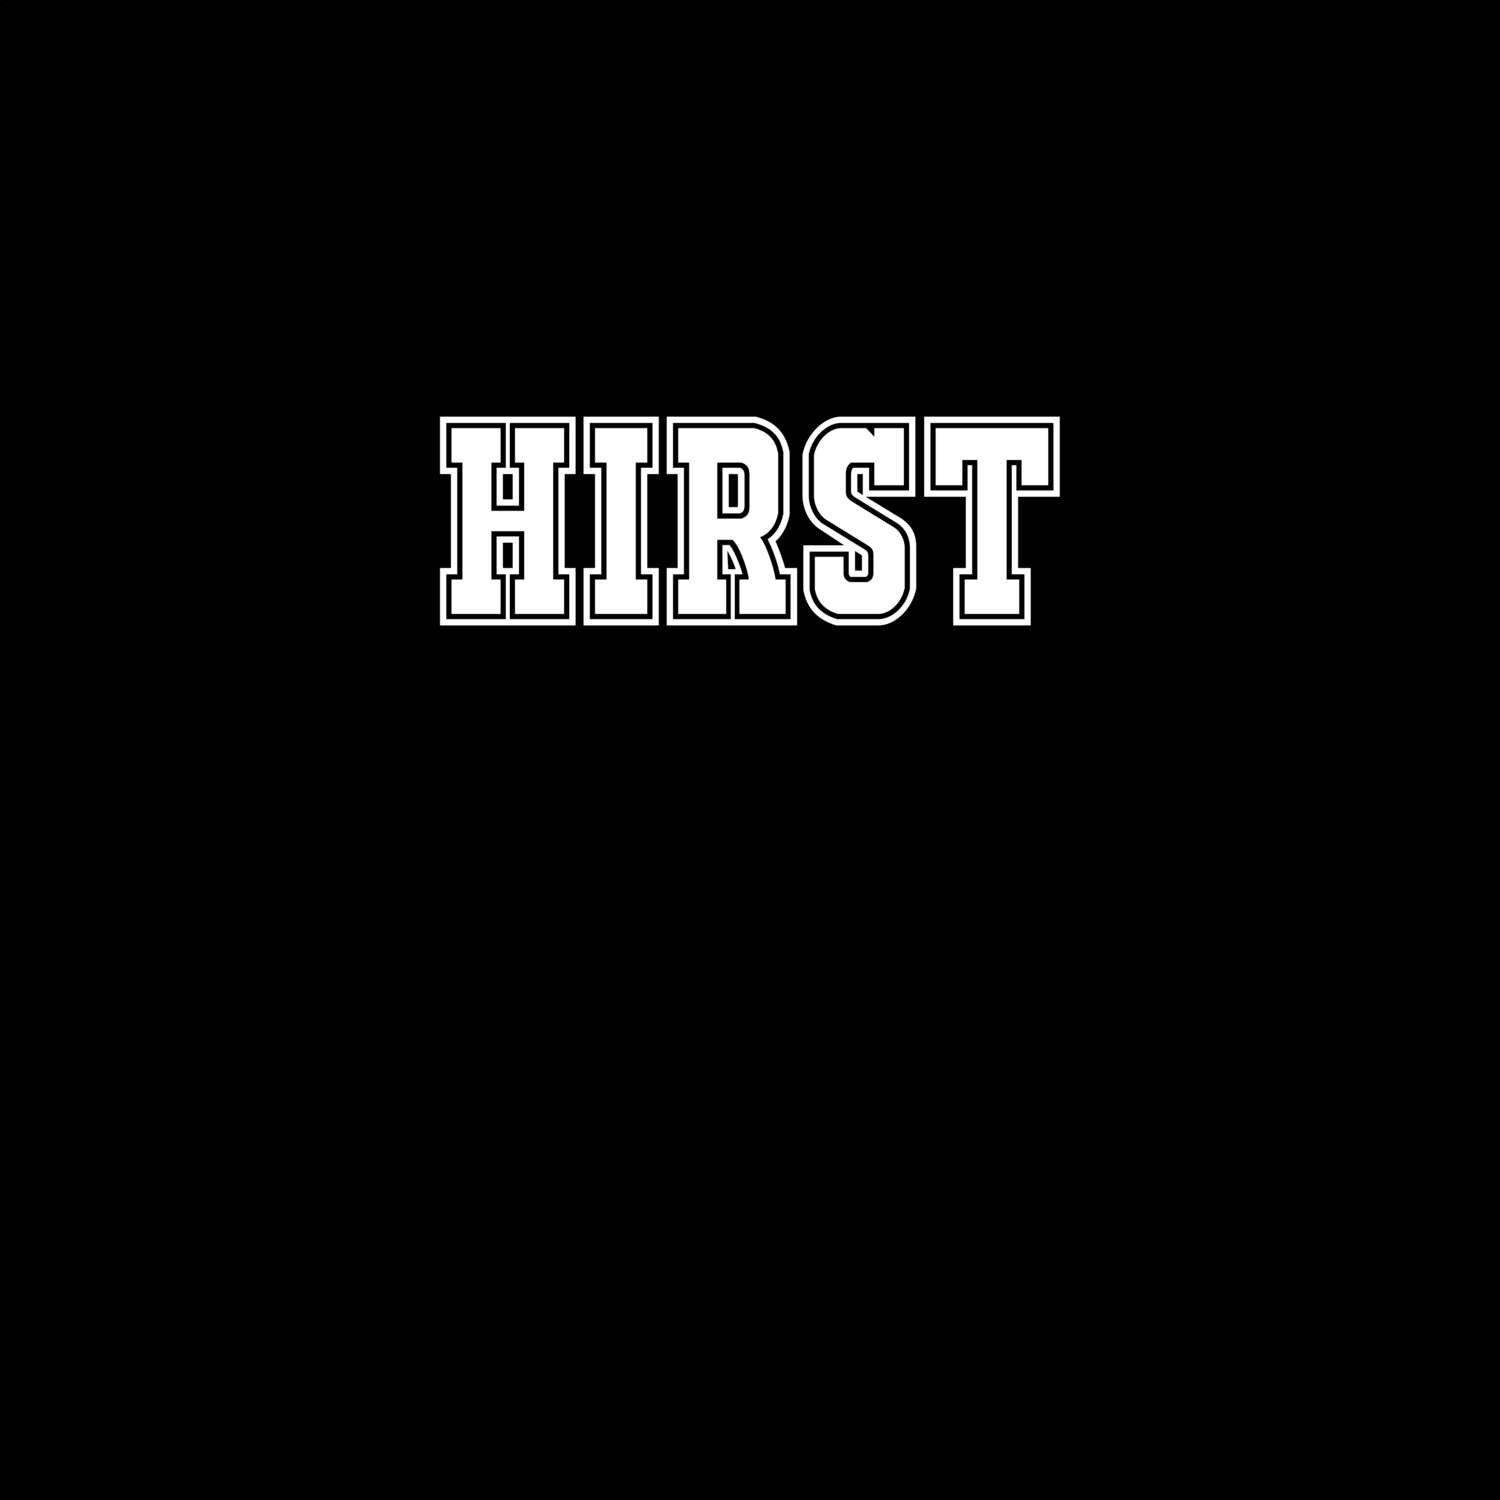 Hirst T-Shirt »Classic«